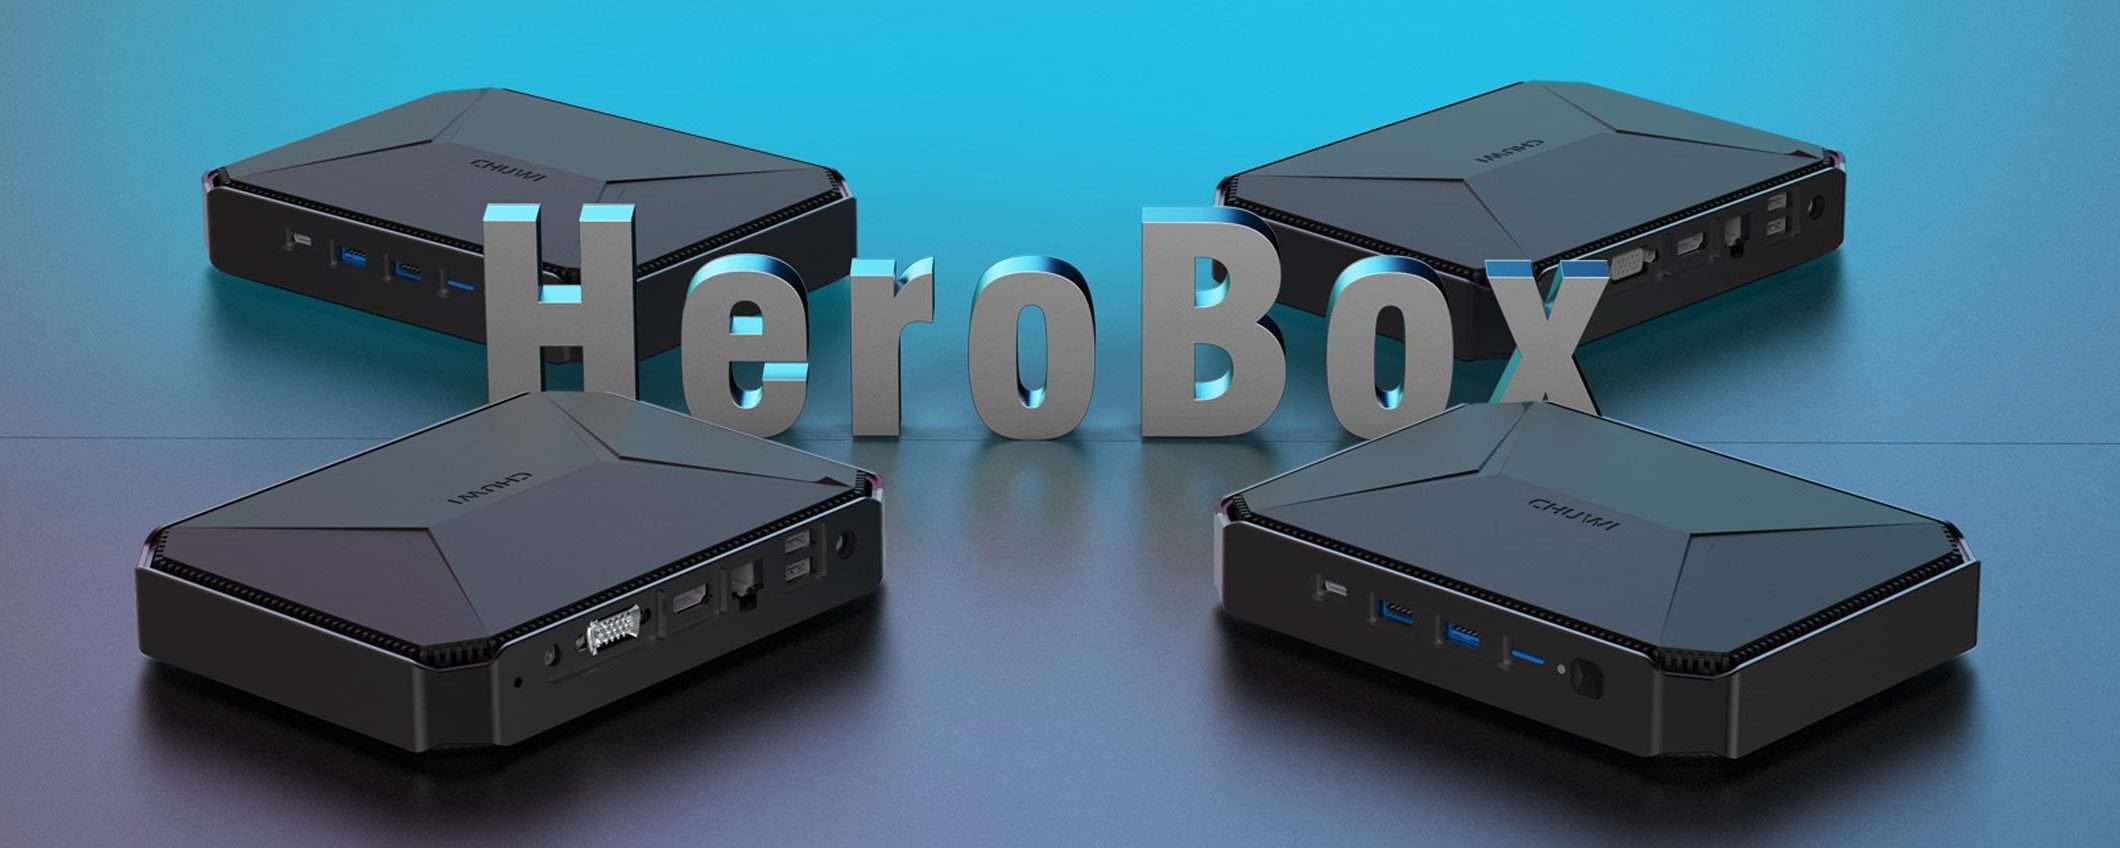 Chuwi HeroBox: Mini PC in offerta lampo pre-BF